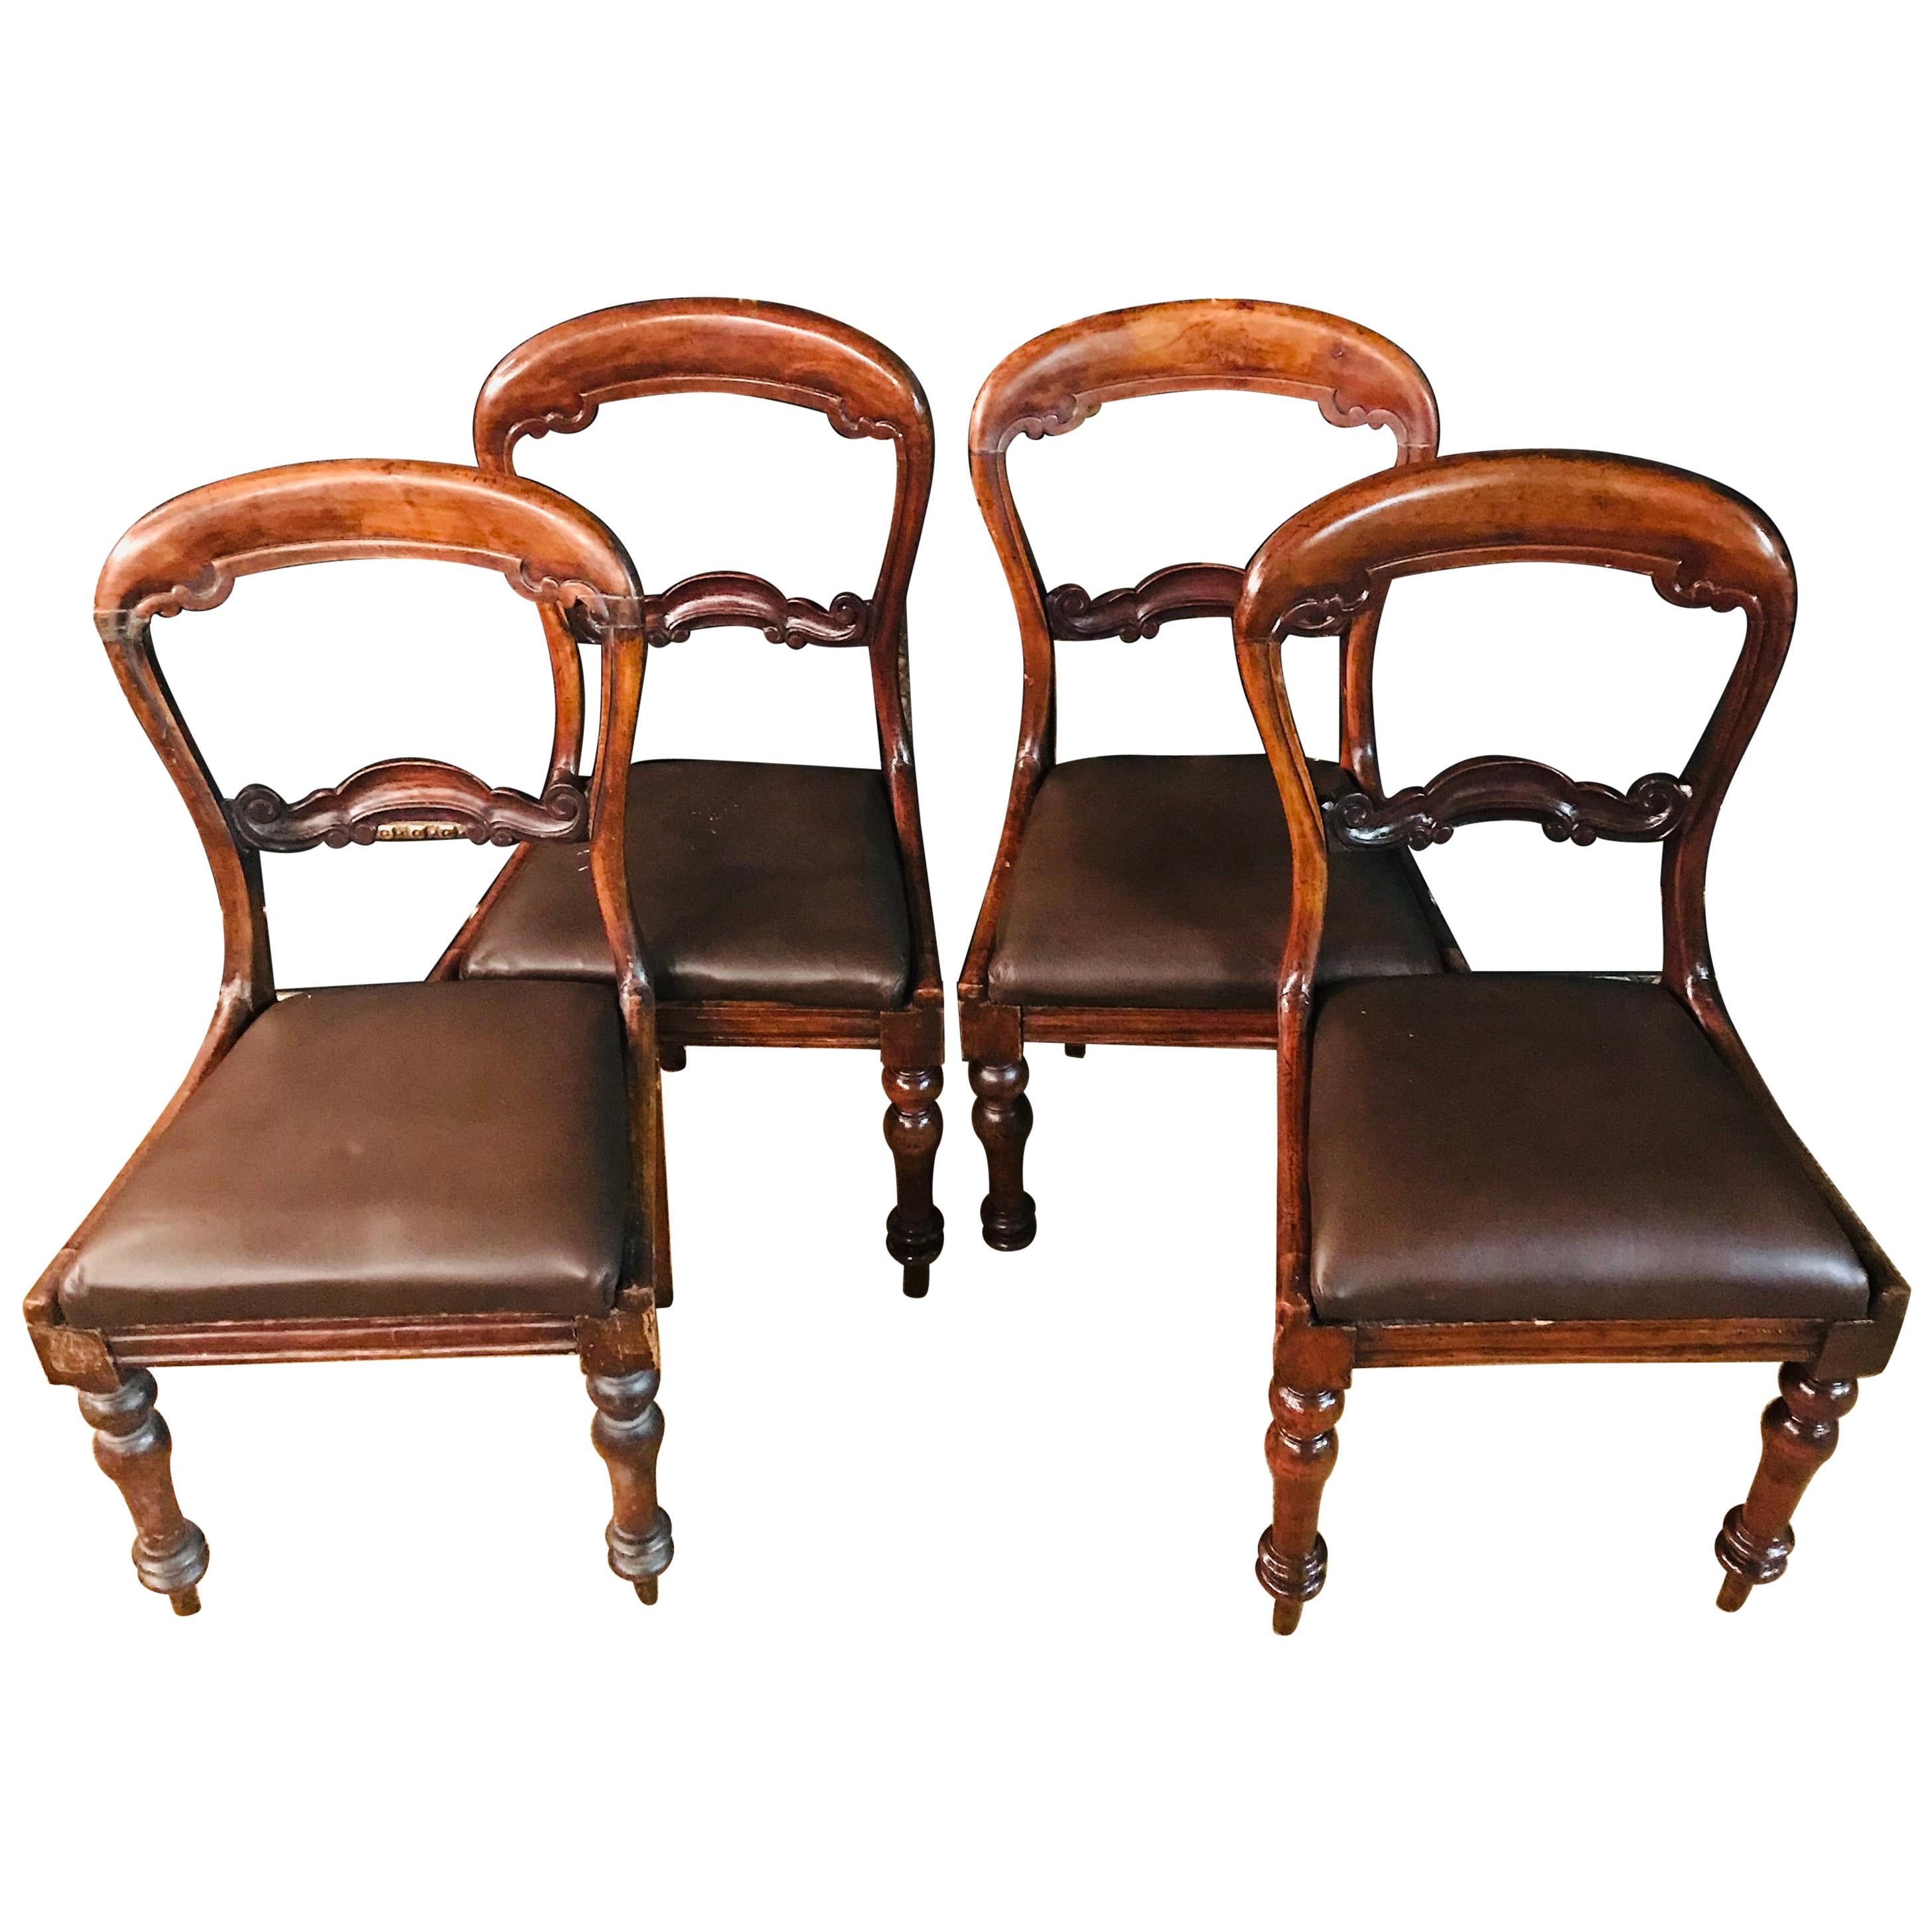 4 Original antique Biedermeier Chairs Solid Mahogany, circa 1840 For Sale